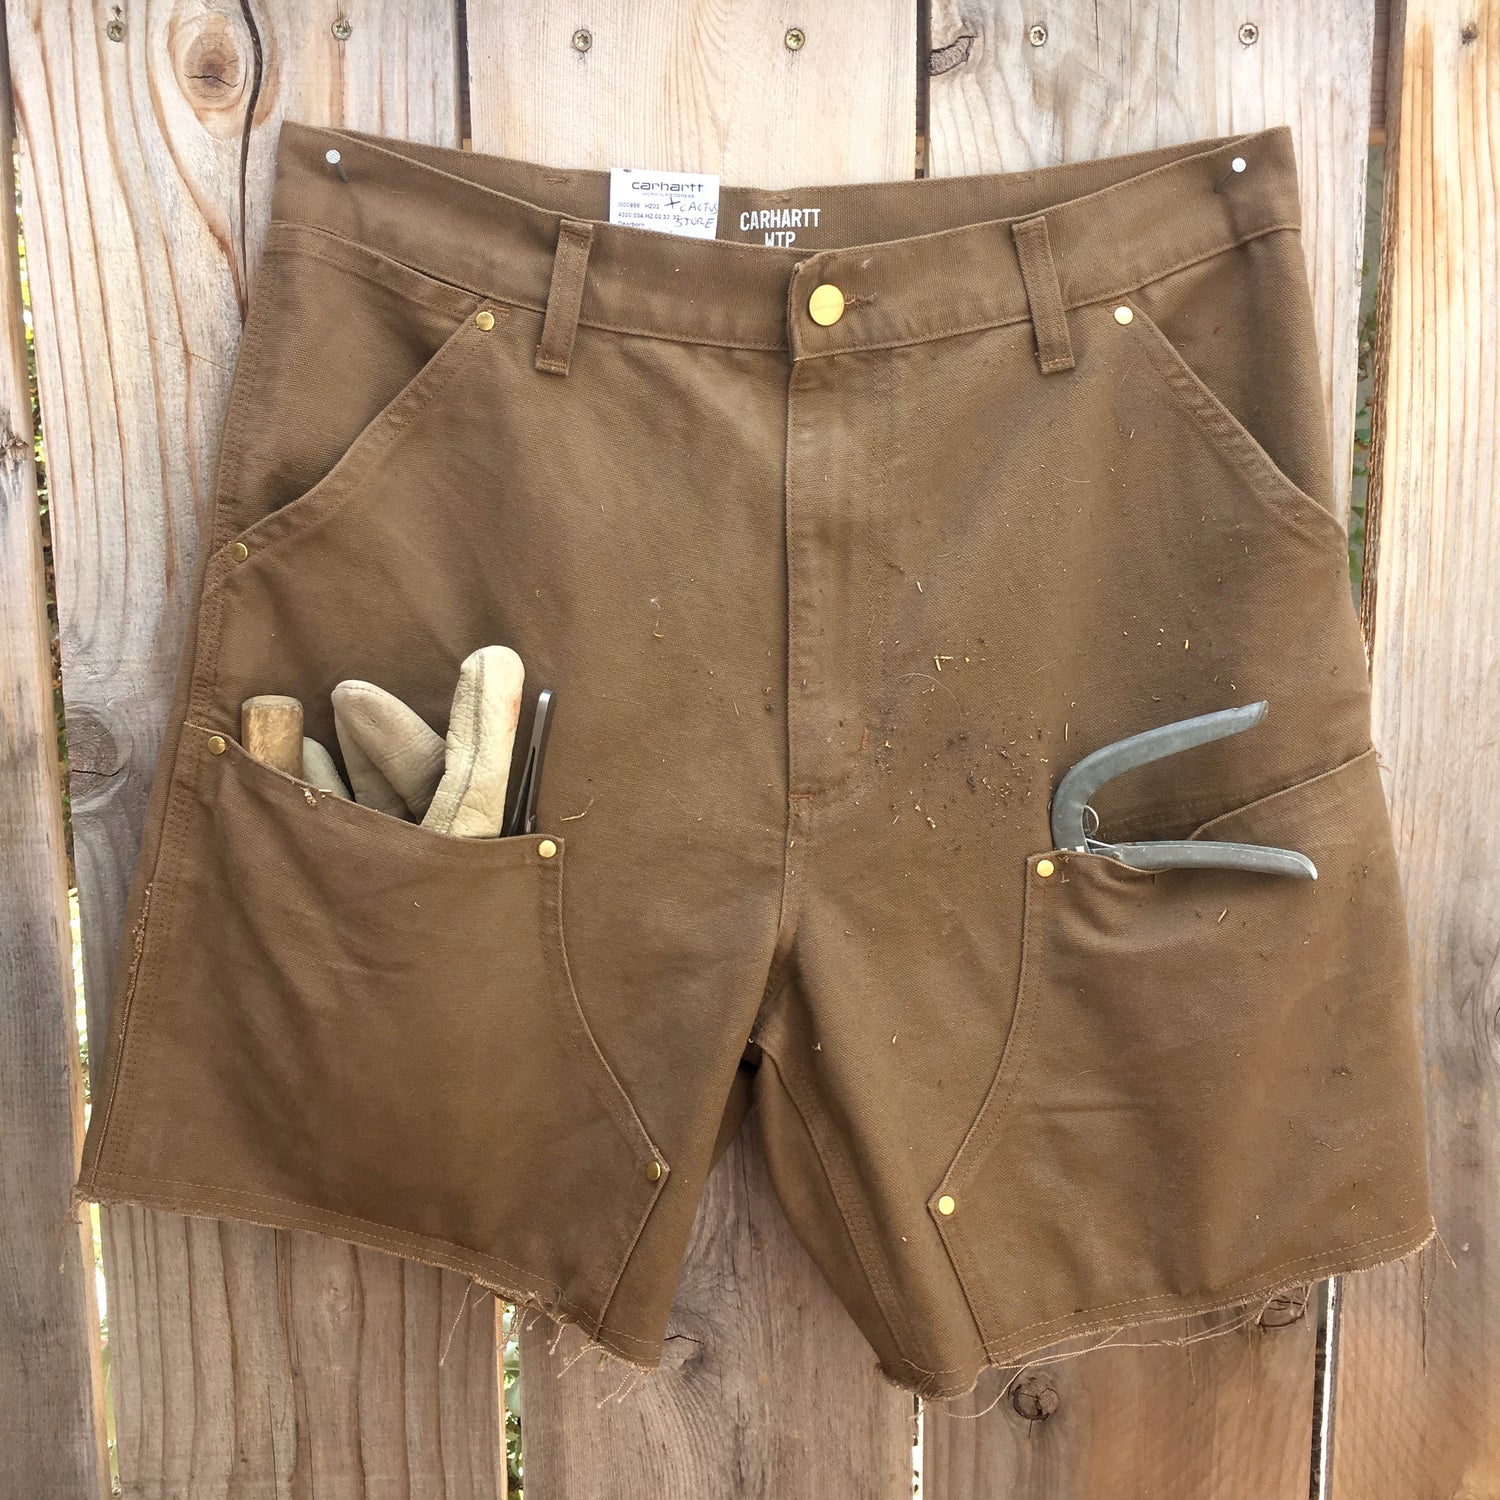 Garden shorts (CHC)